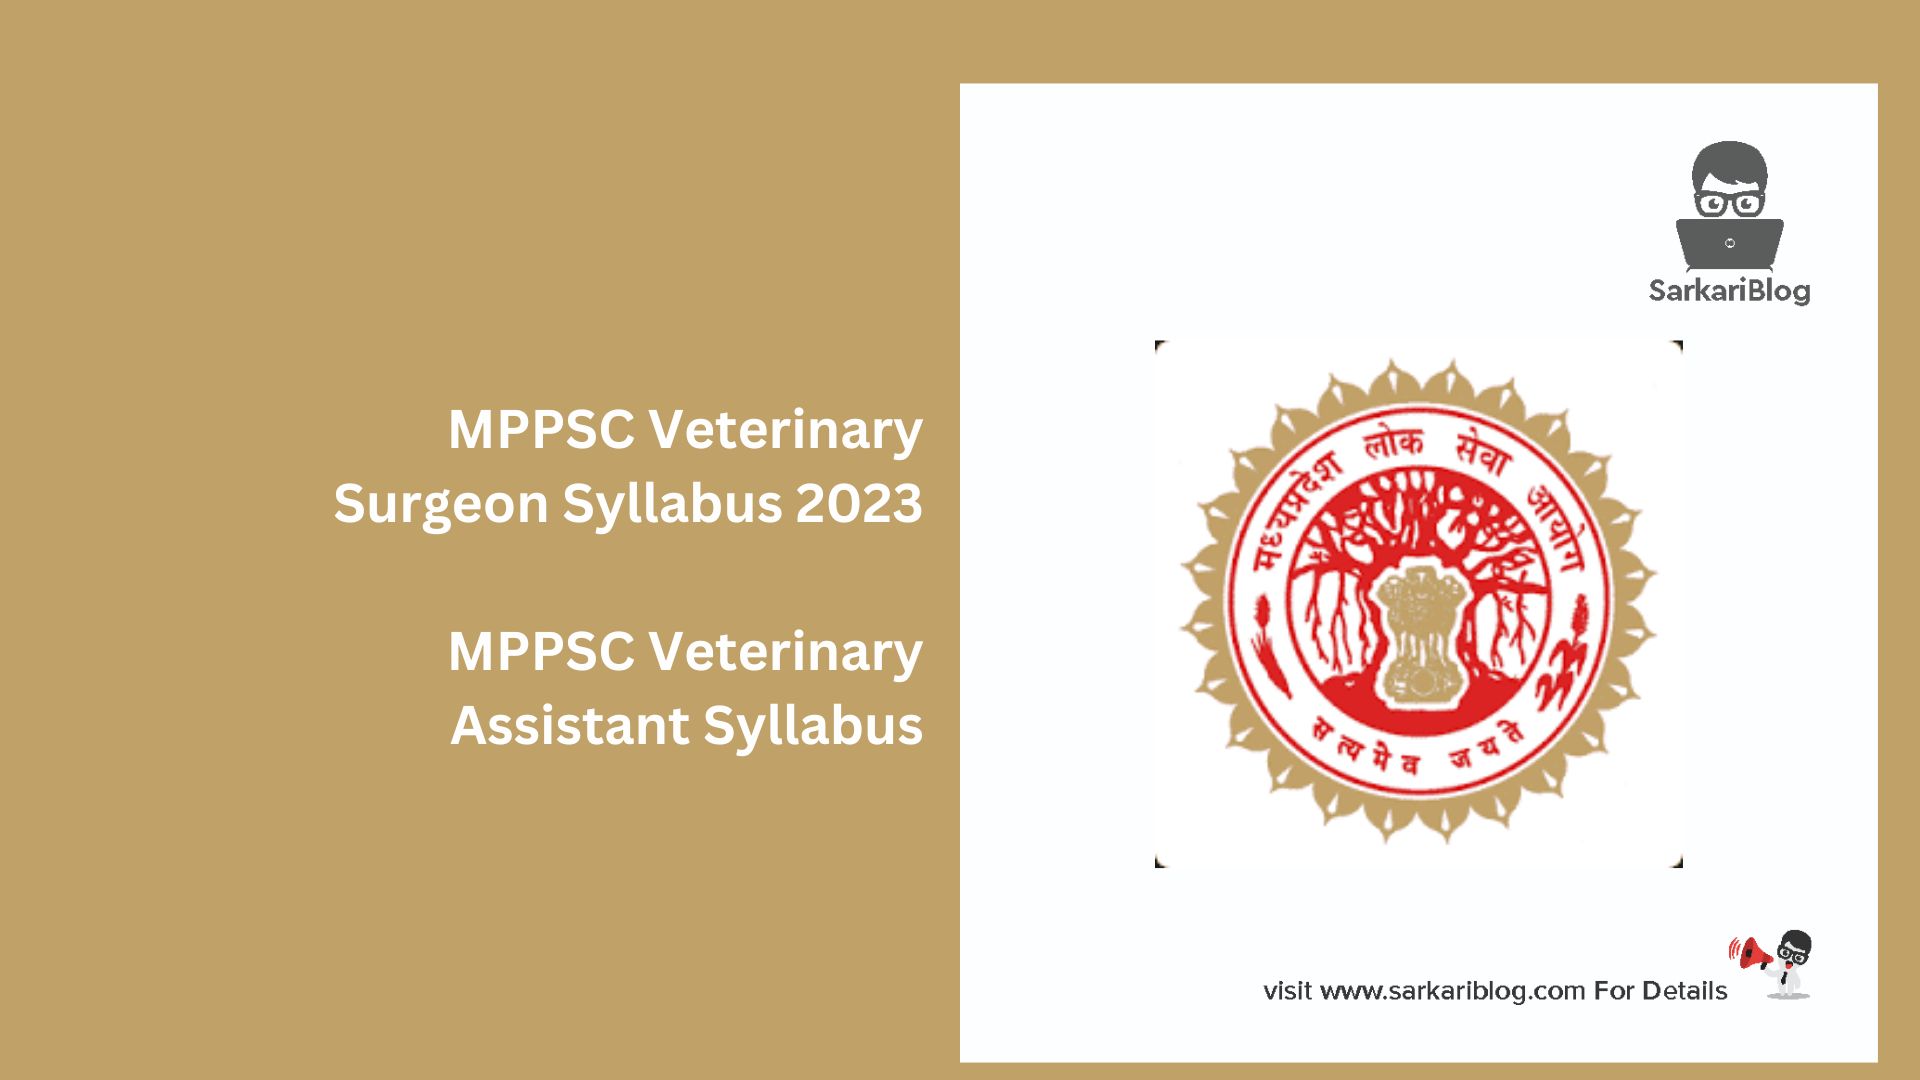 MPPSC Veterinary Surgeon Syllabus 2023